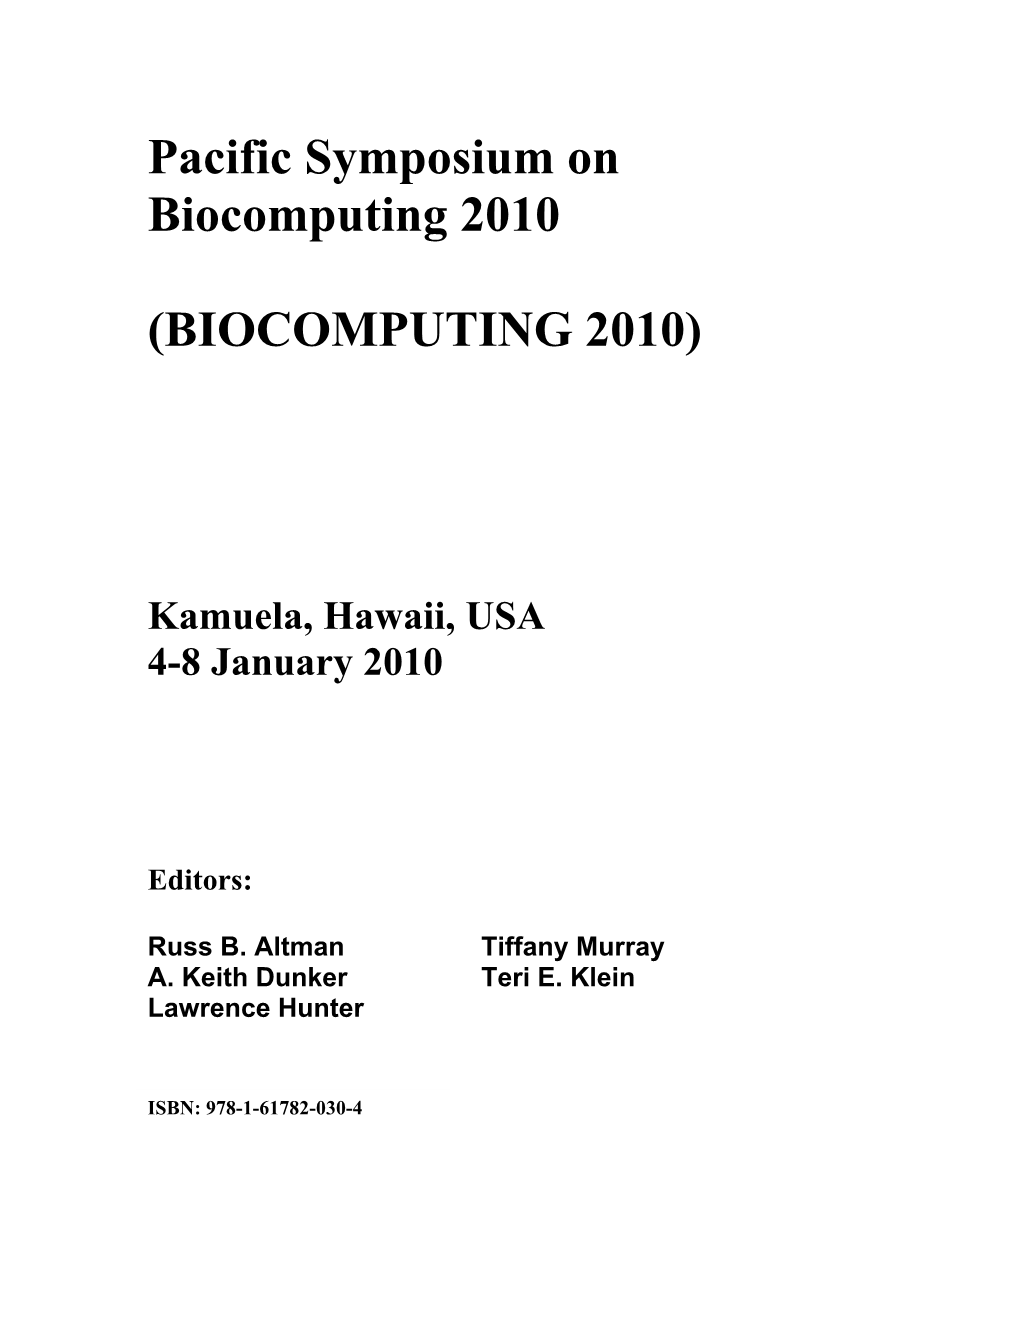 Pacific Symposium on Biocomputing 2010